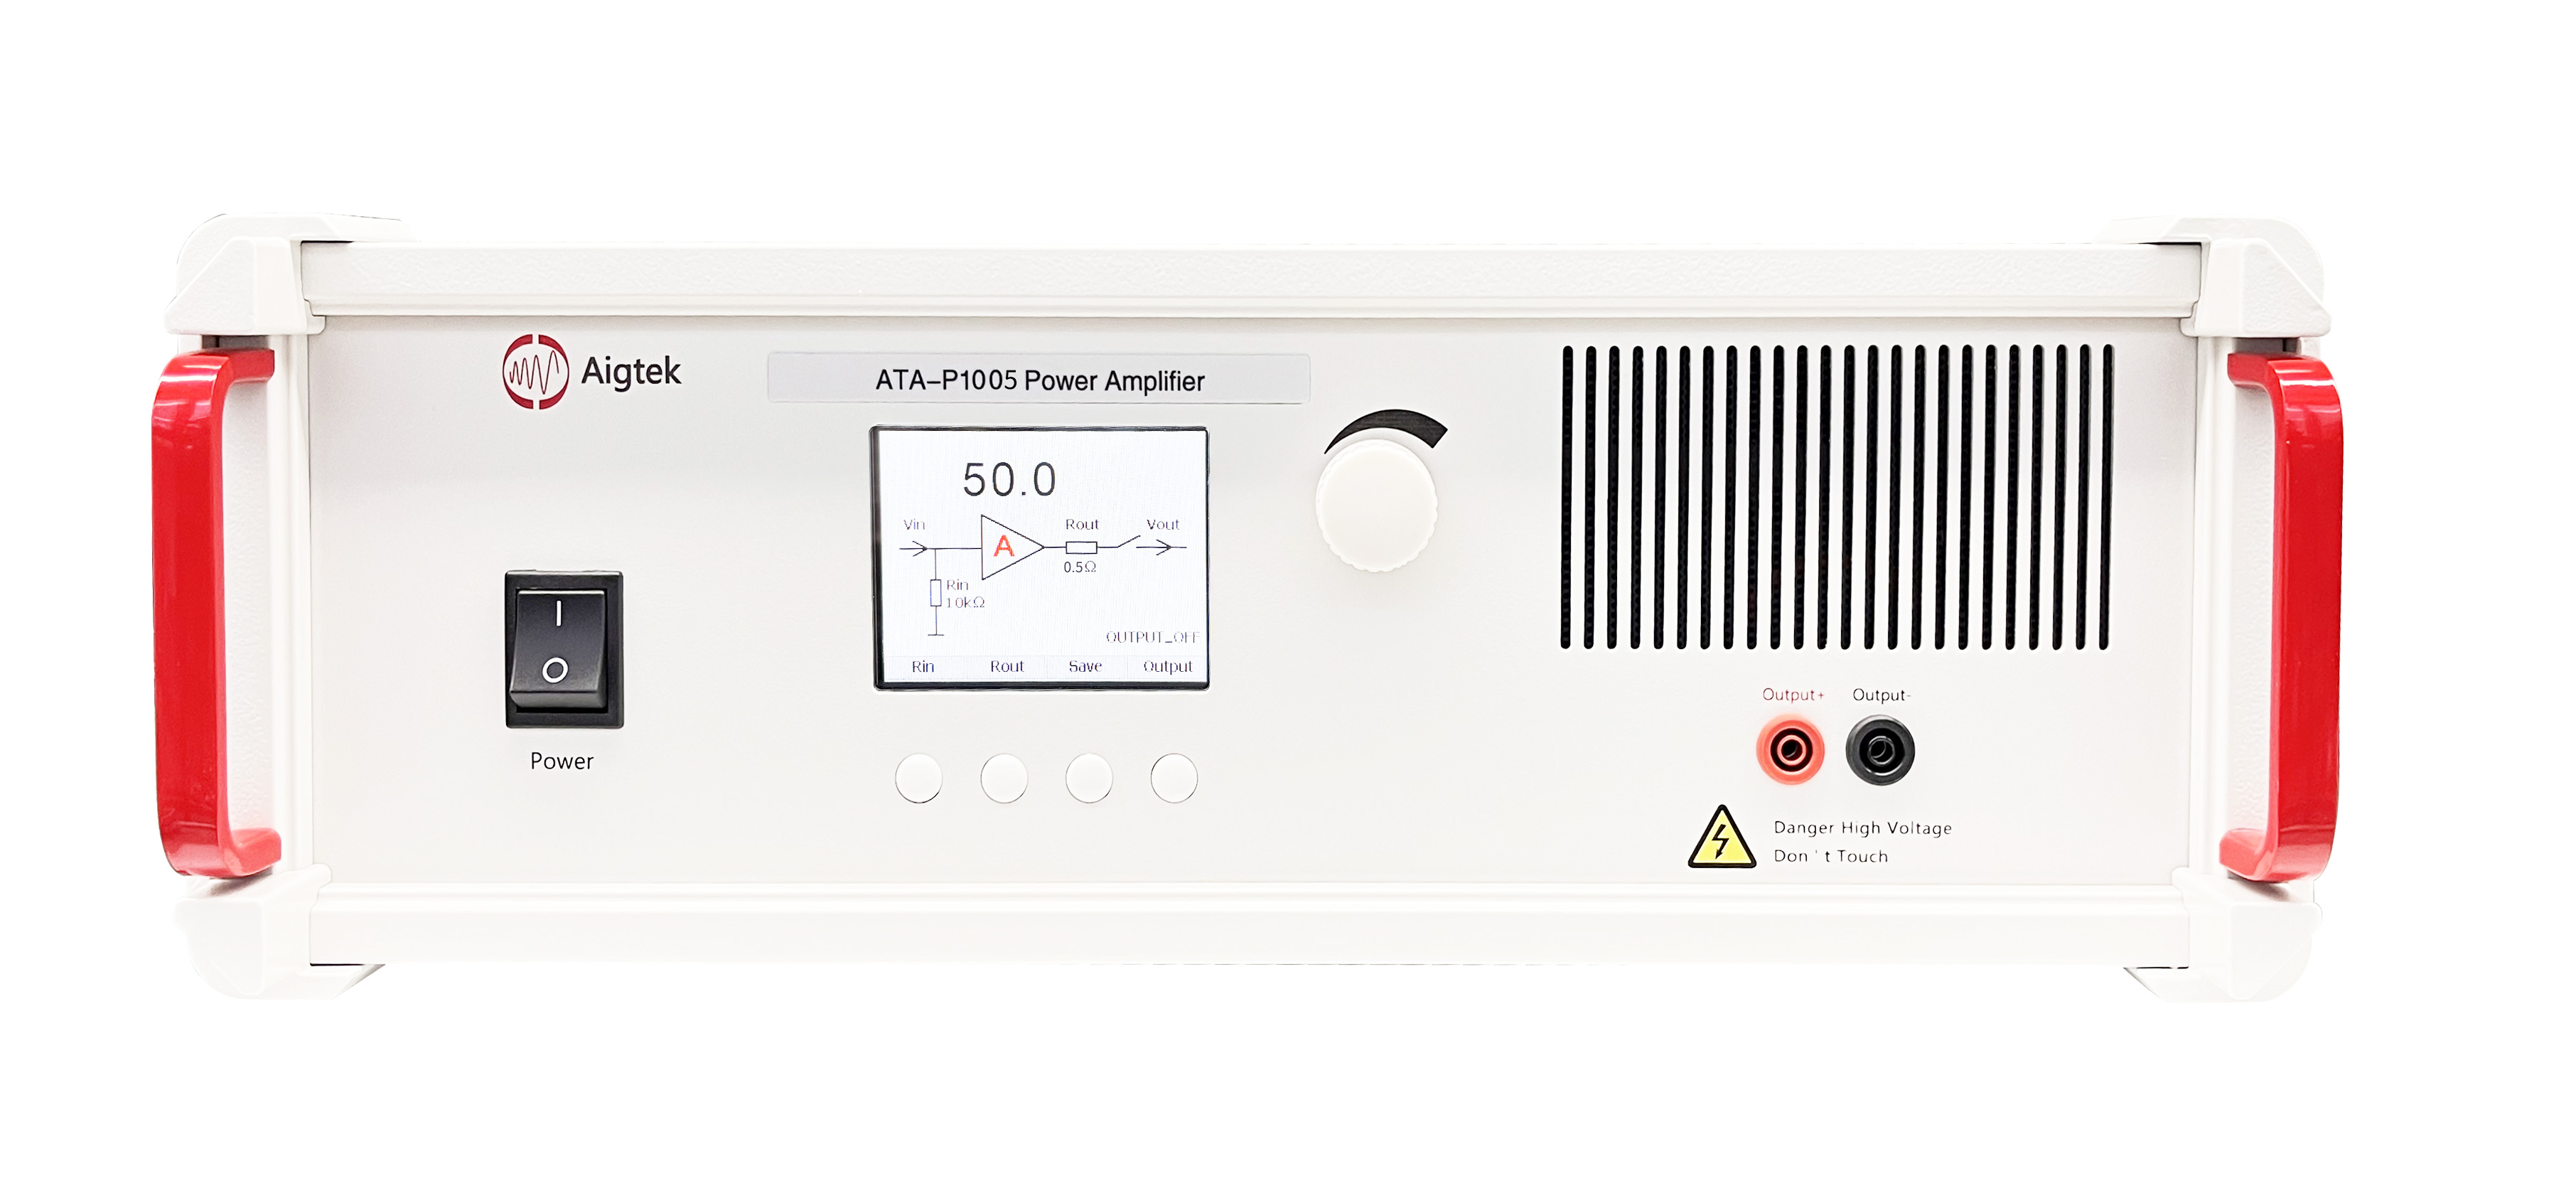 ATA-P1005壓電疊堆功率放大器指標參數